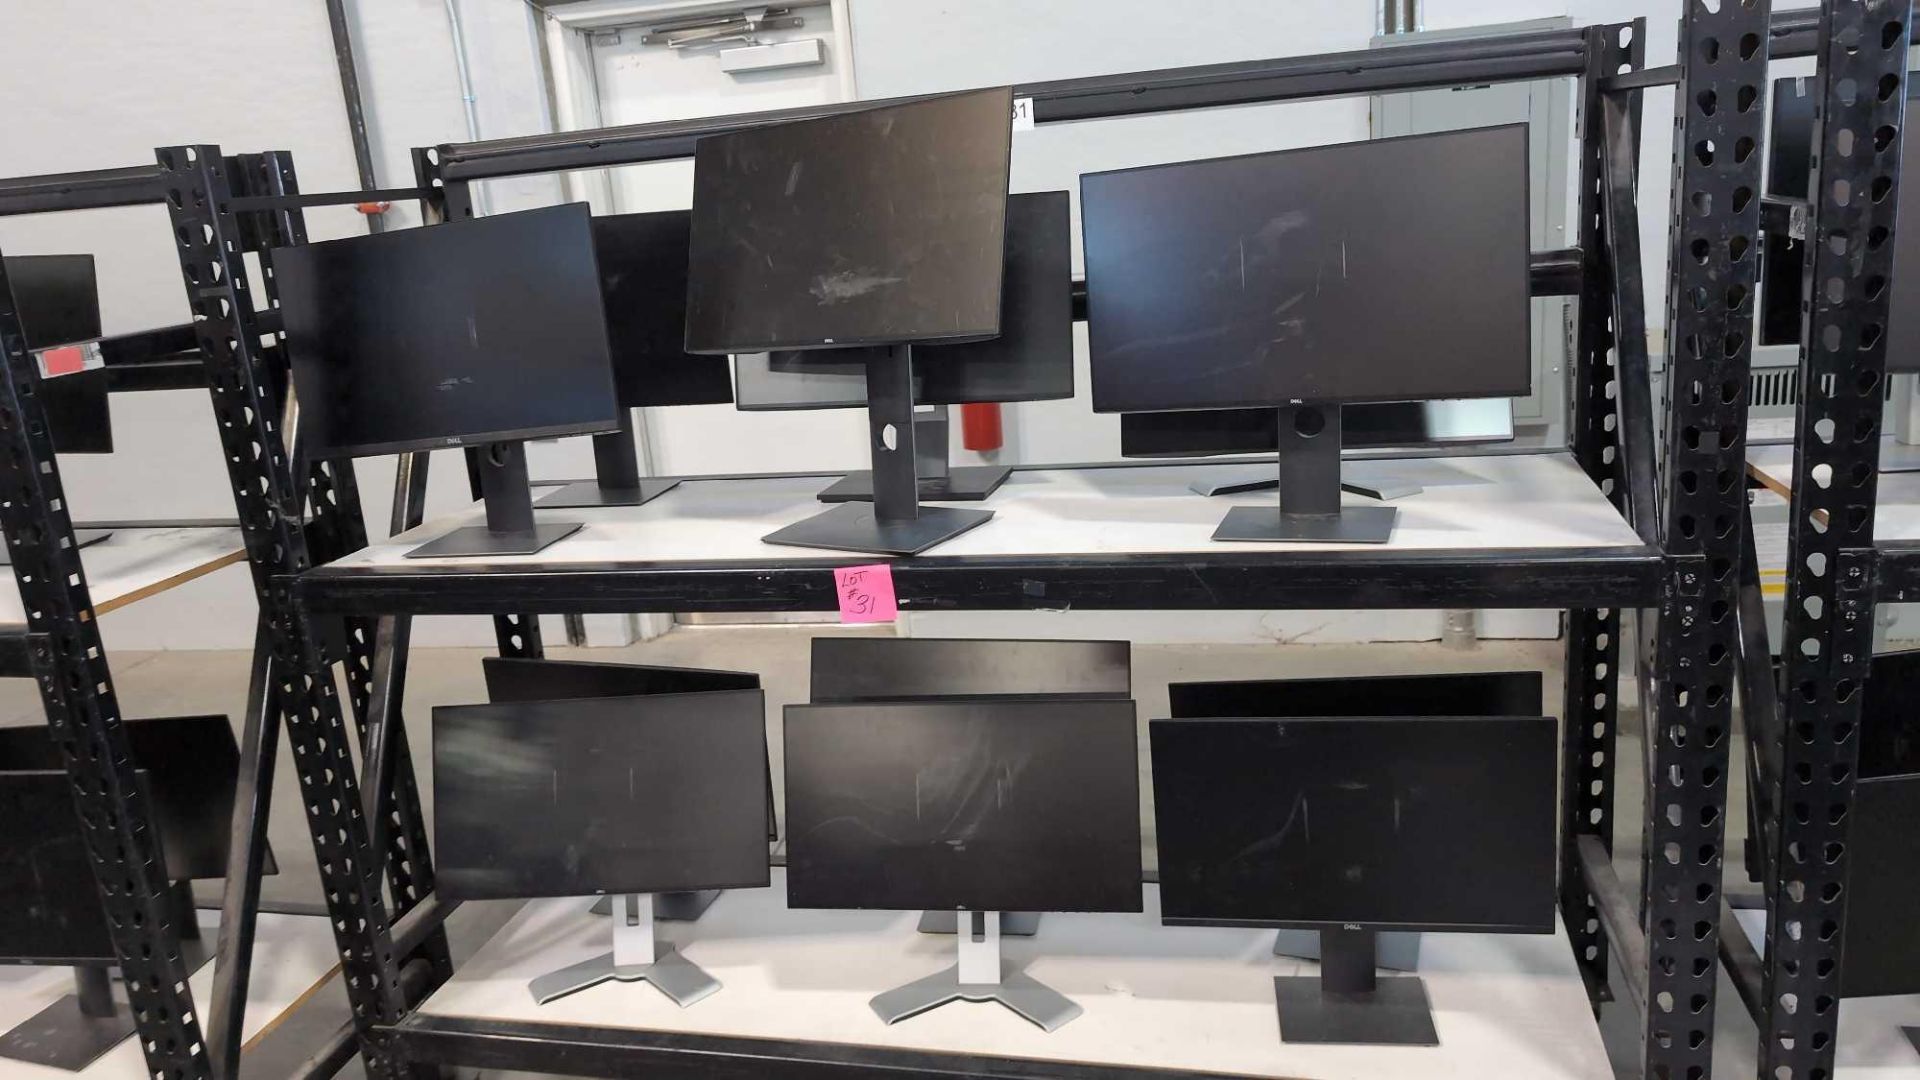 12 Dell Computer Monitors - Image 4 of 4